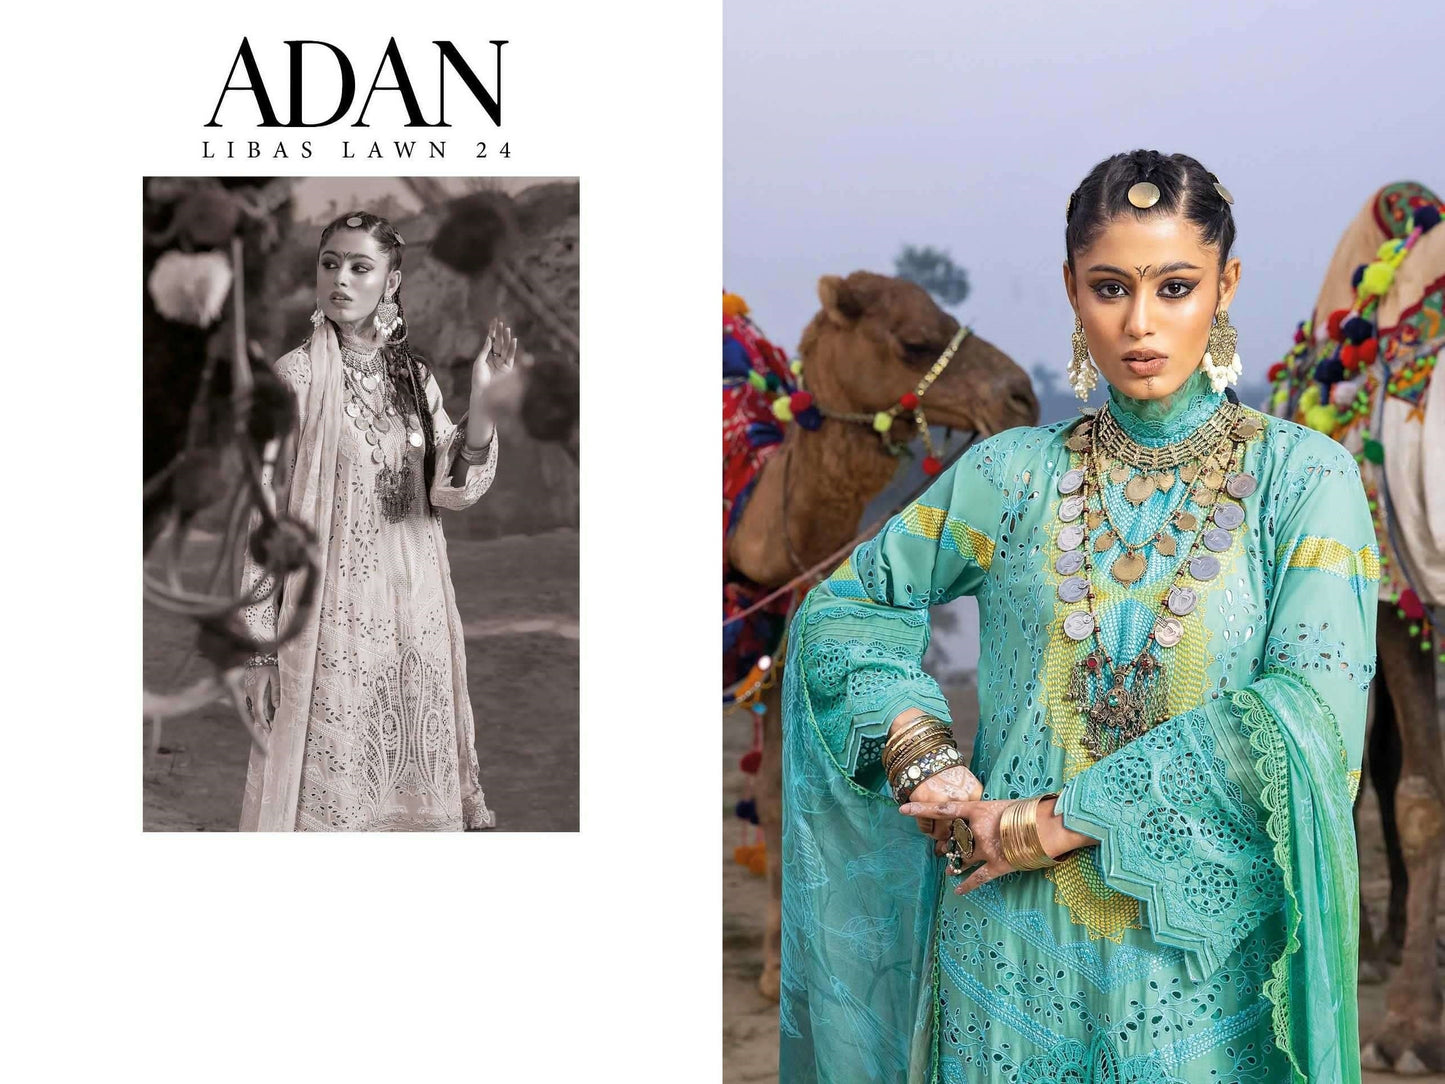 Adan Libas Pakistani Designer Super Hit Embroidered Lawn Suit